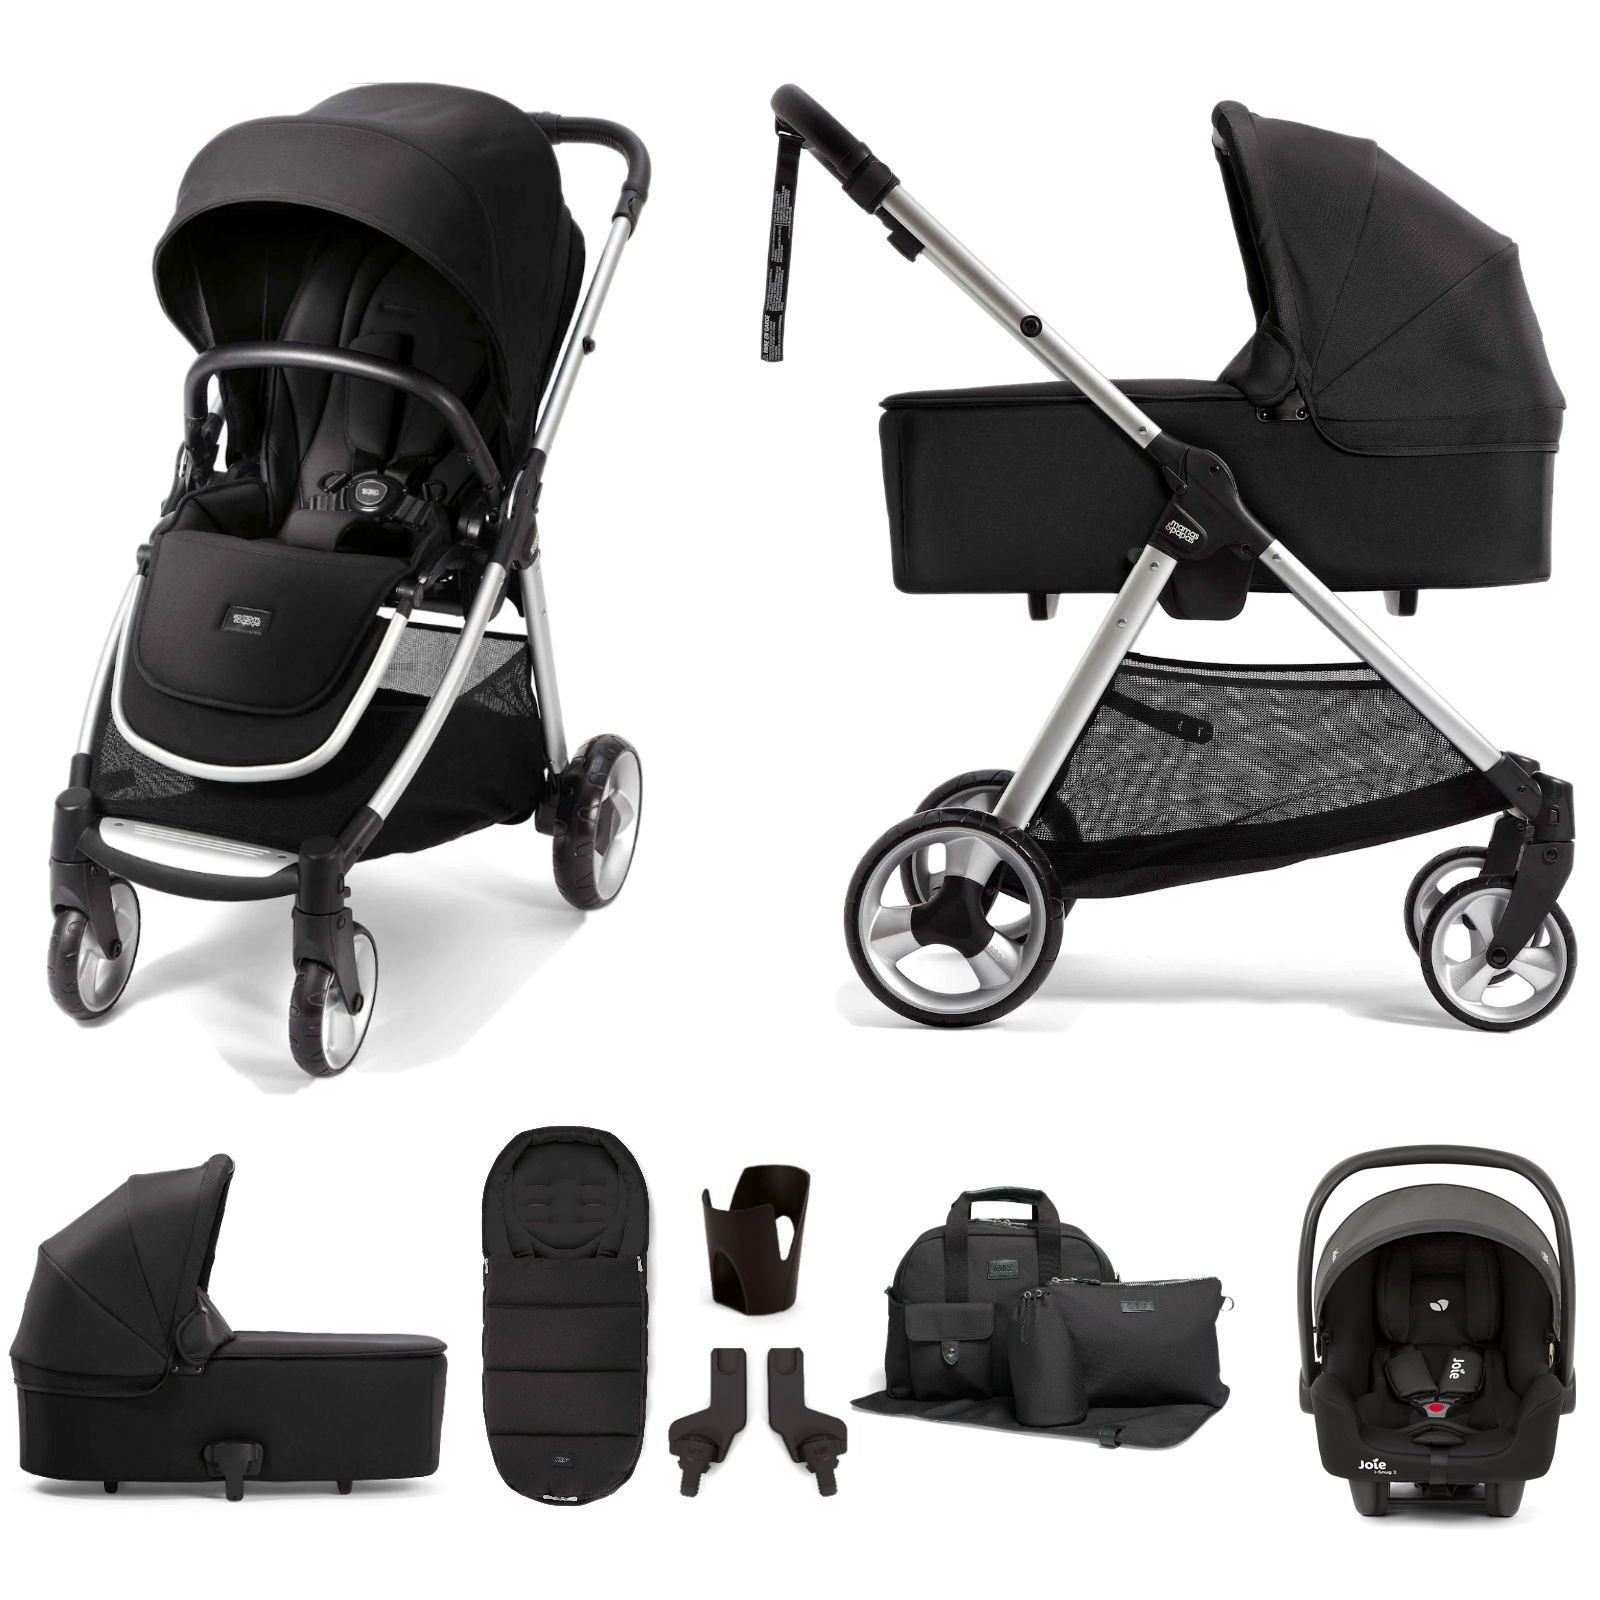 Mamas & Papas Flip XT2 7pc Essentials (i-Snug 2 Car Seat) Travel System with Carrycot - Black